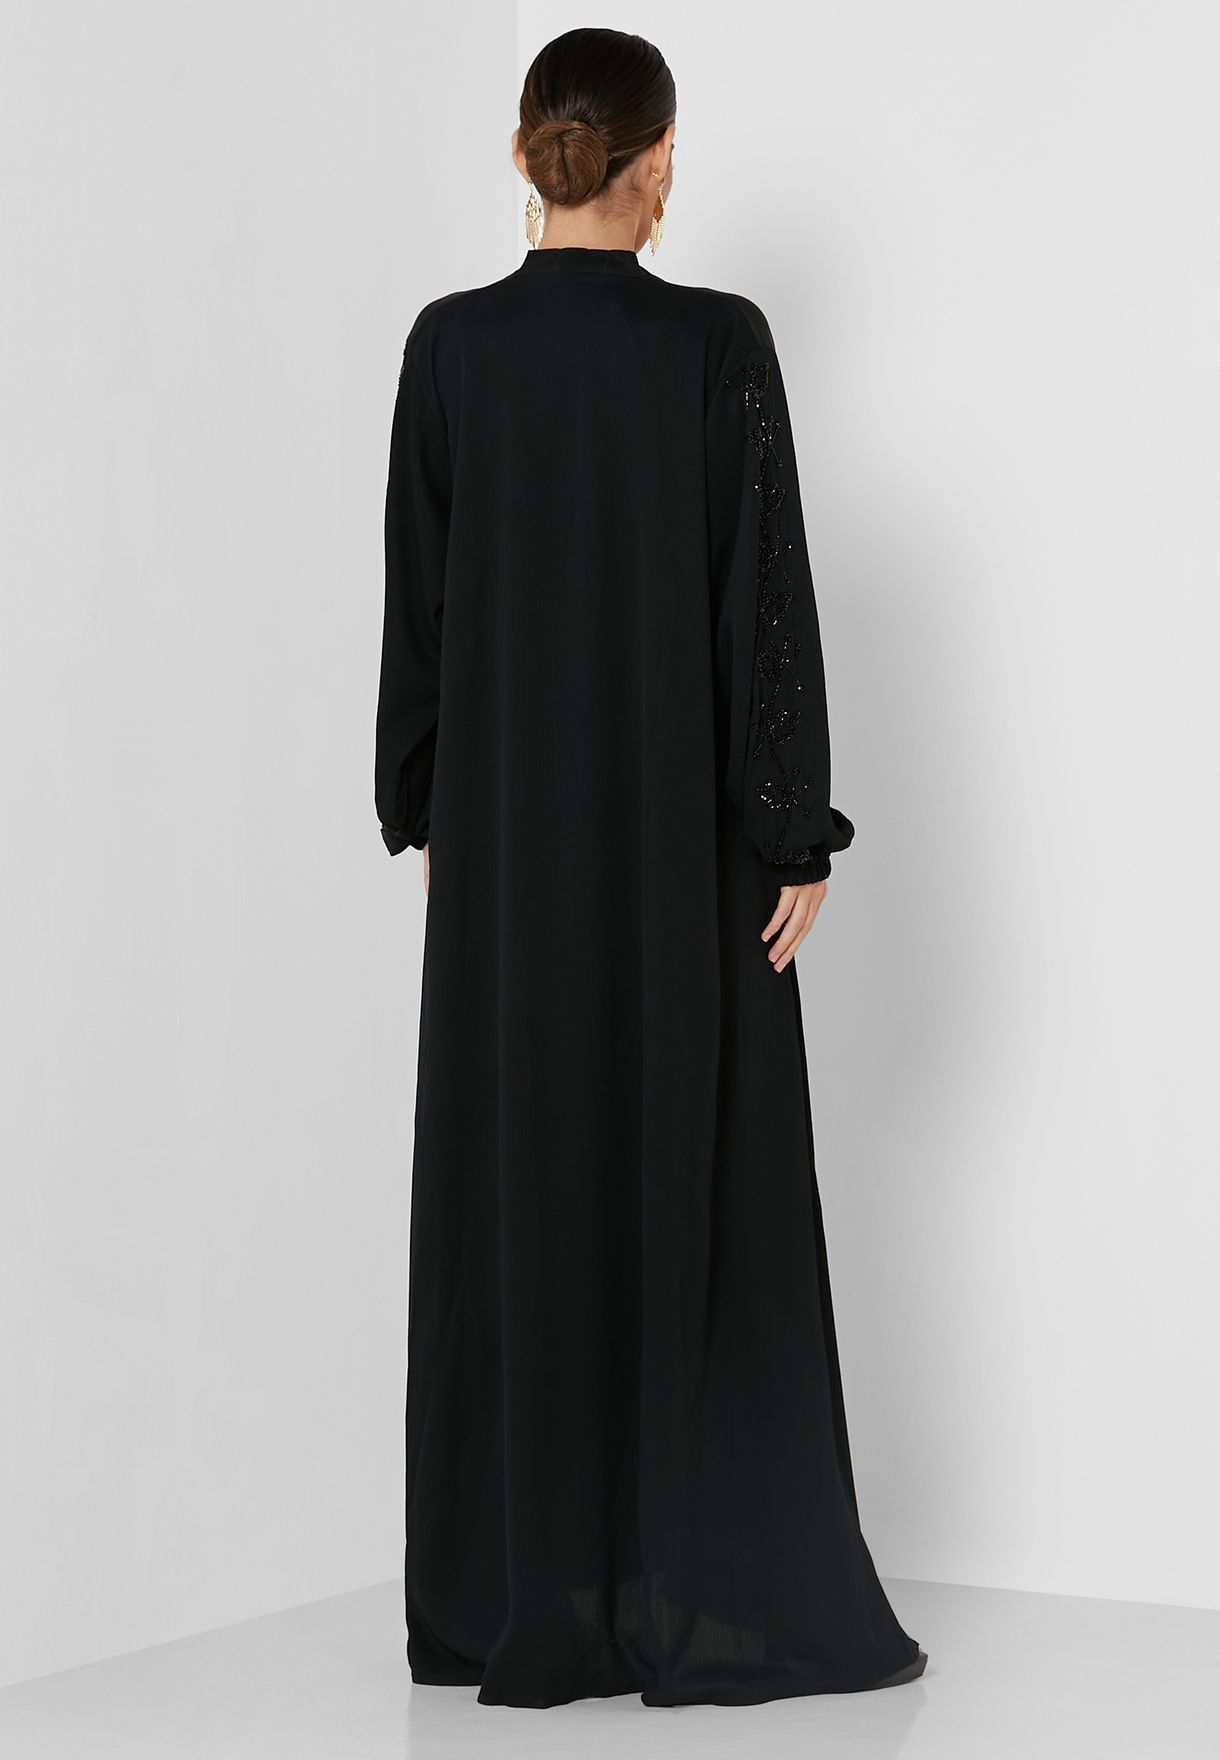 Buy Khizana black Embellished Sleeve Abaya for Women in Riyadh, Jeddah